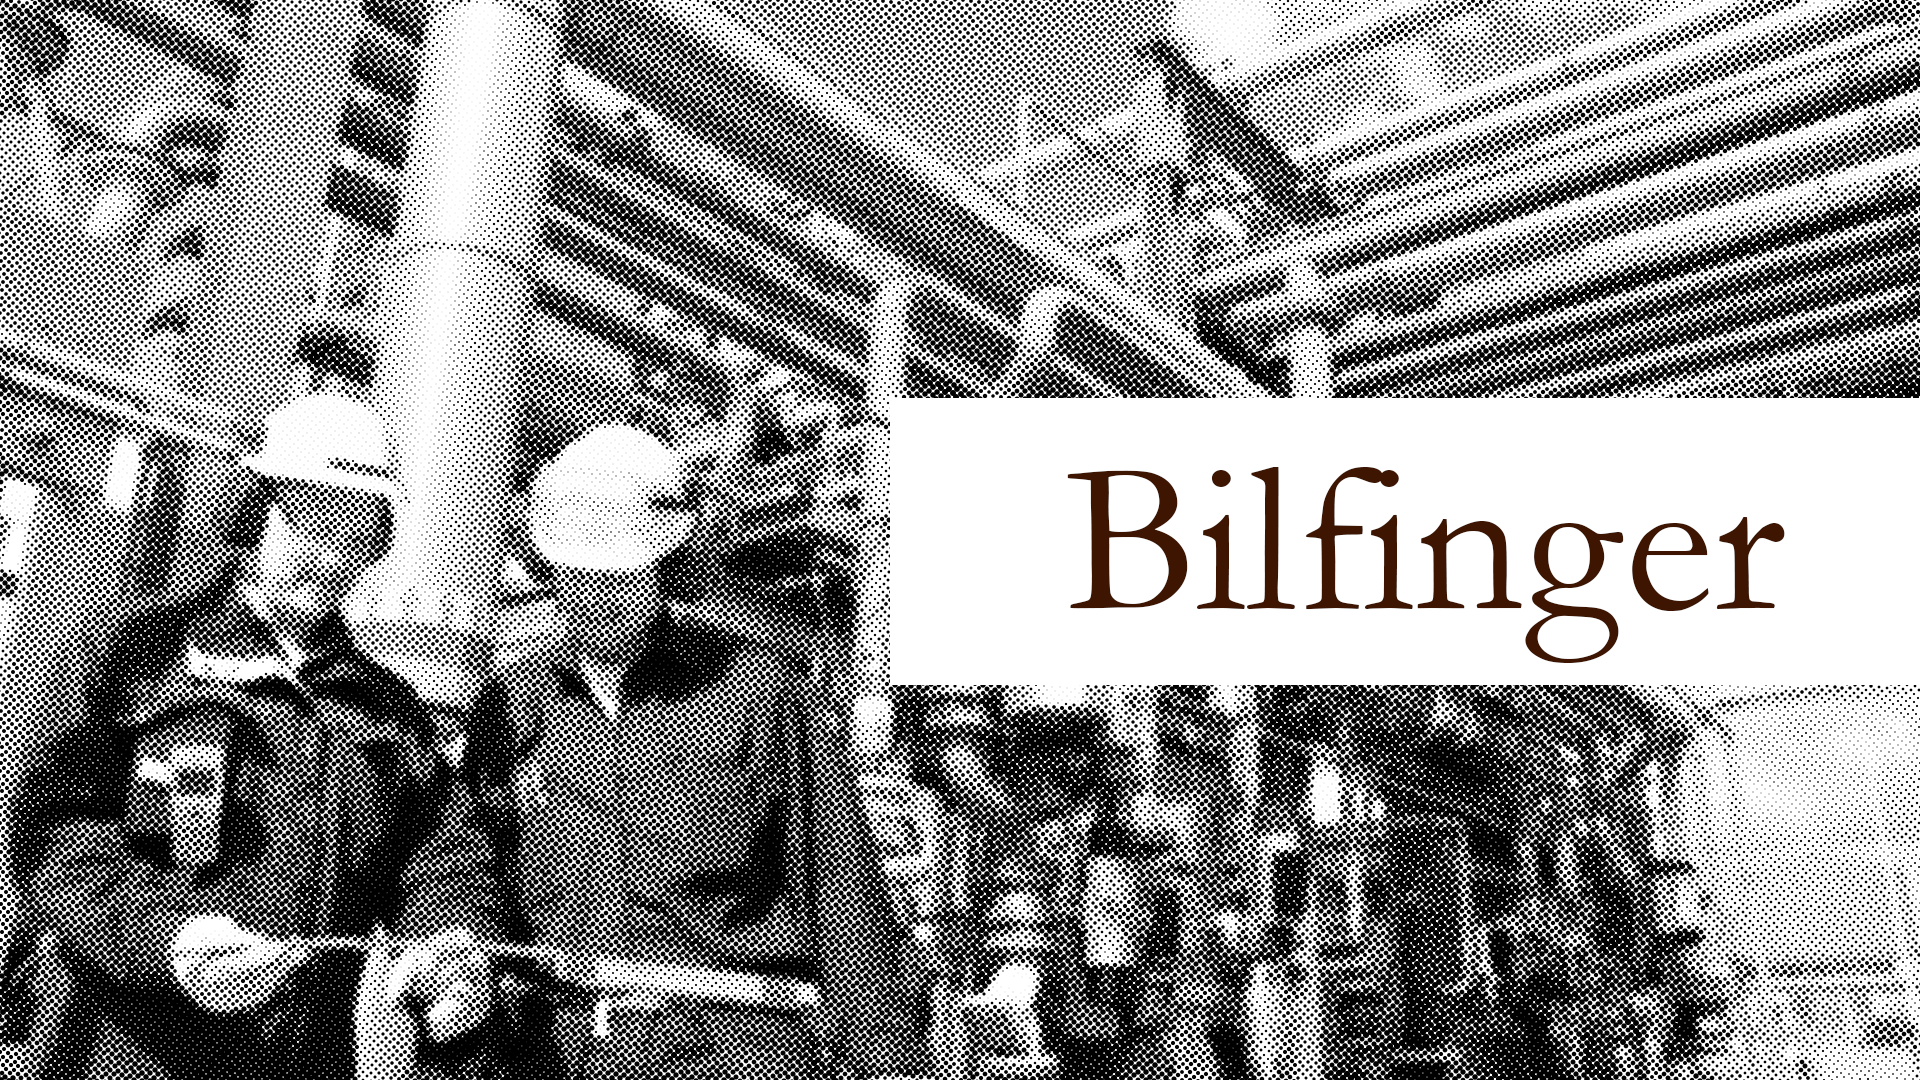 Bilfinger: sustainability put to practice drives good performance